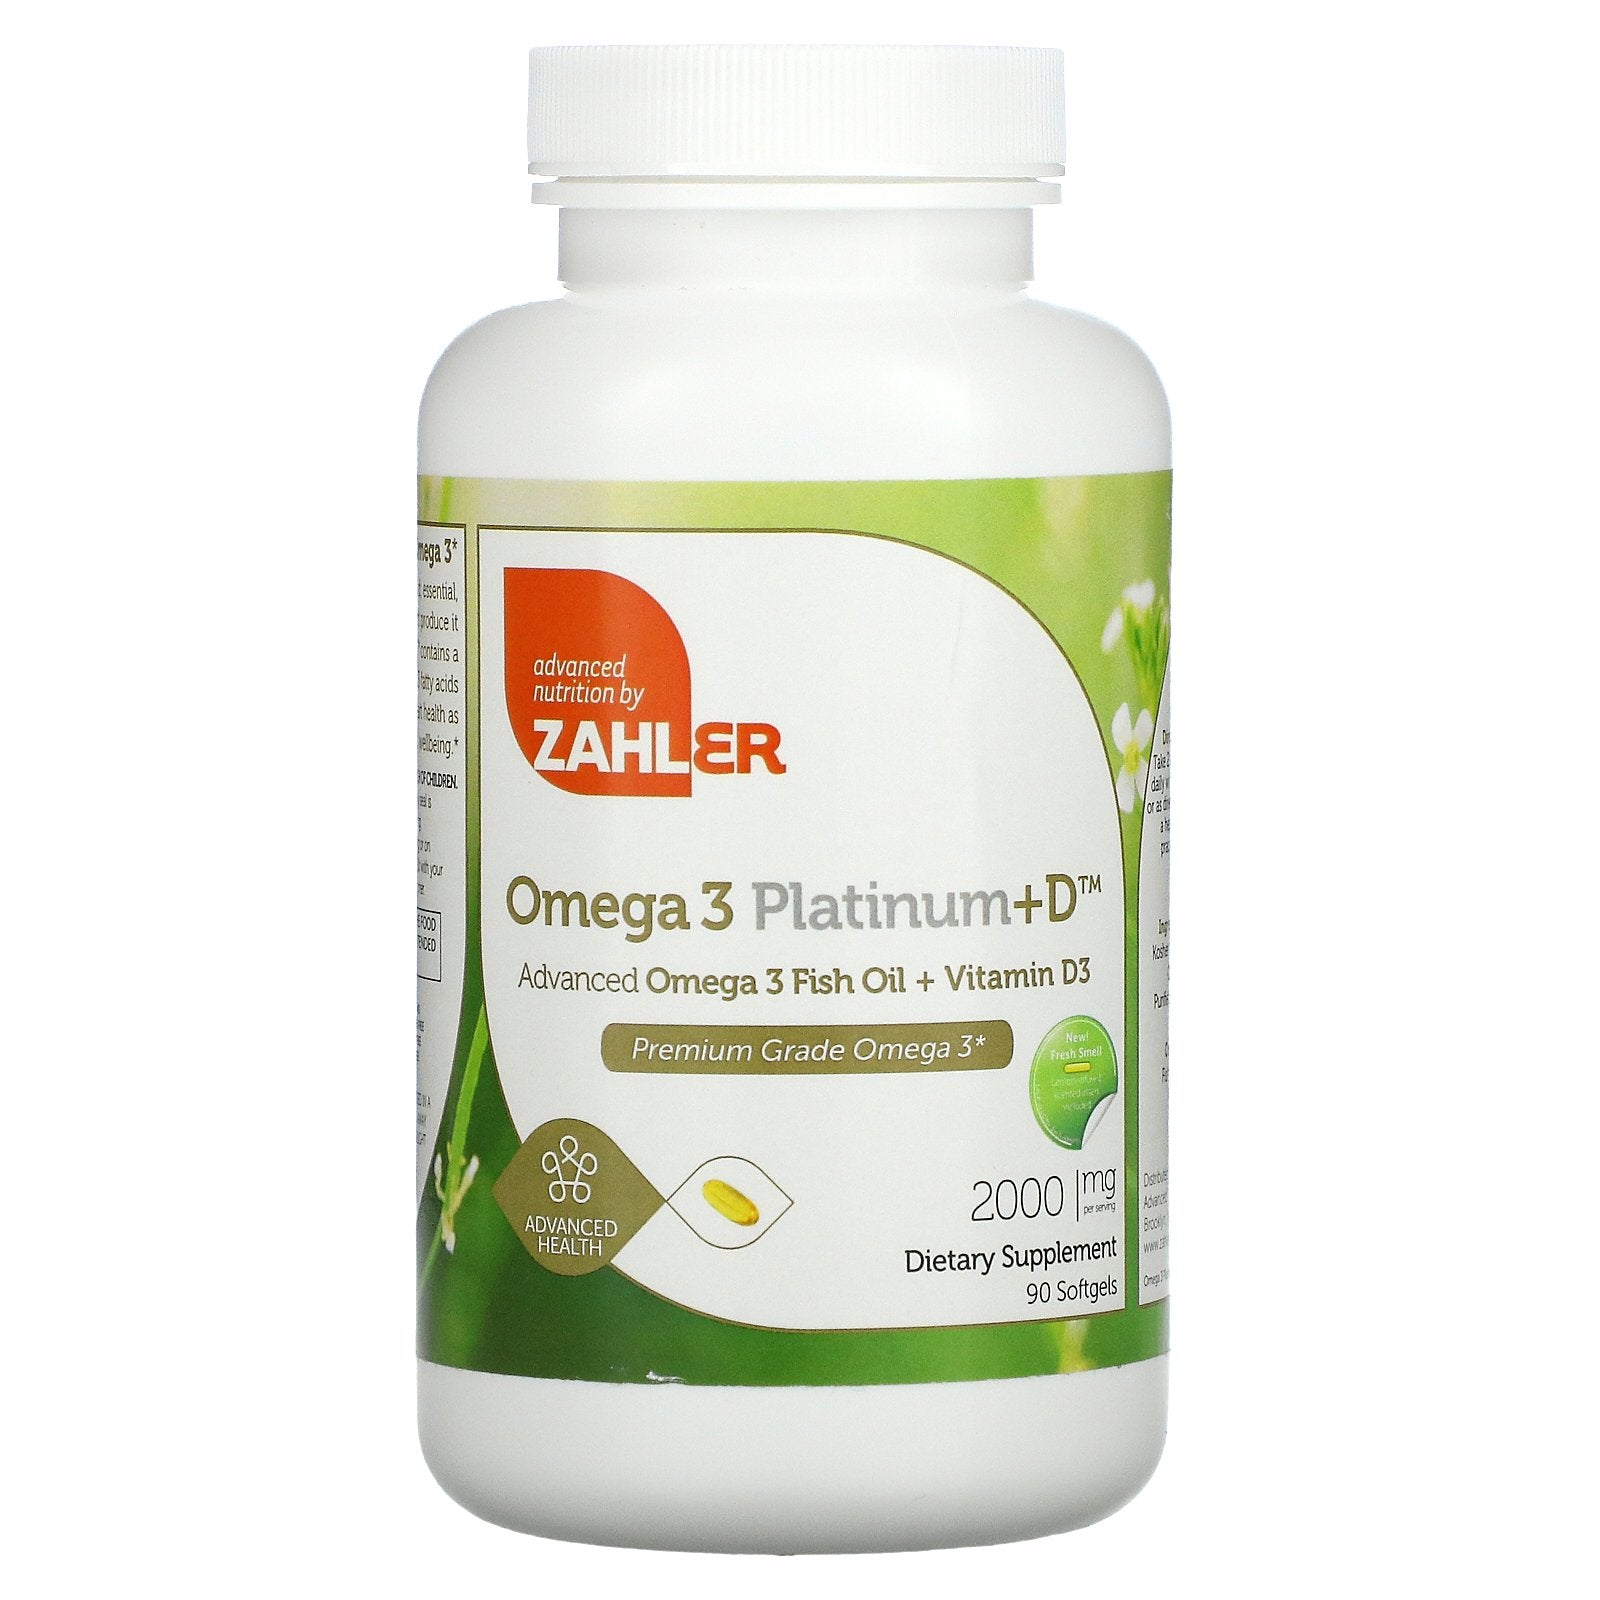 Zahler, Omega 3 Platinum+D, Advanced Omega 3 Fish Oil + Vitamin D3, 1,000 mg, Softgels